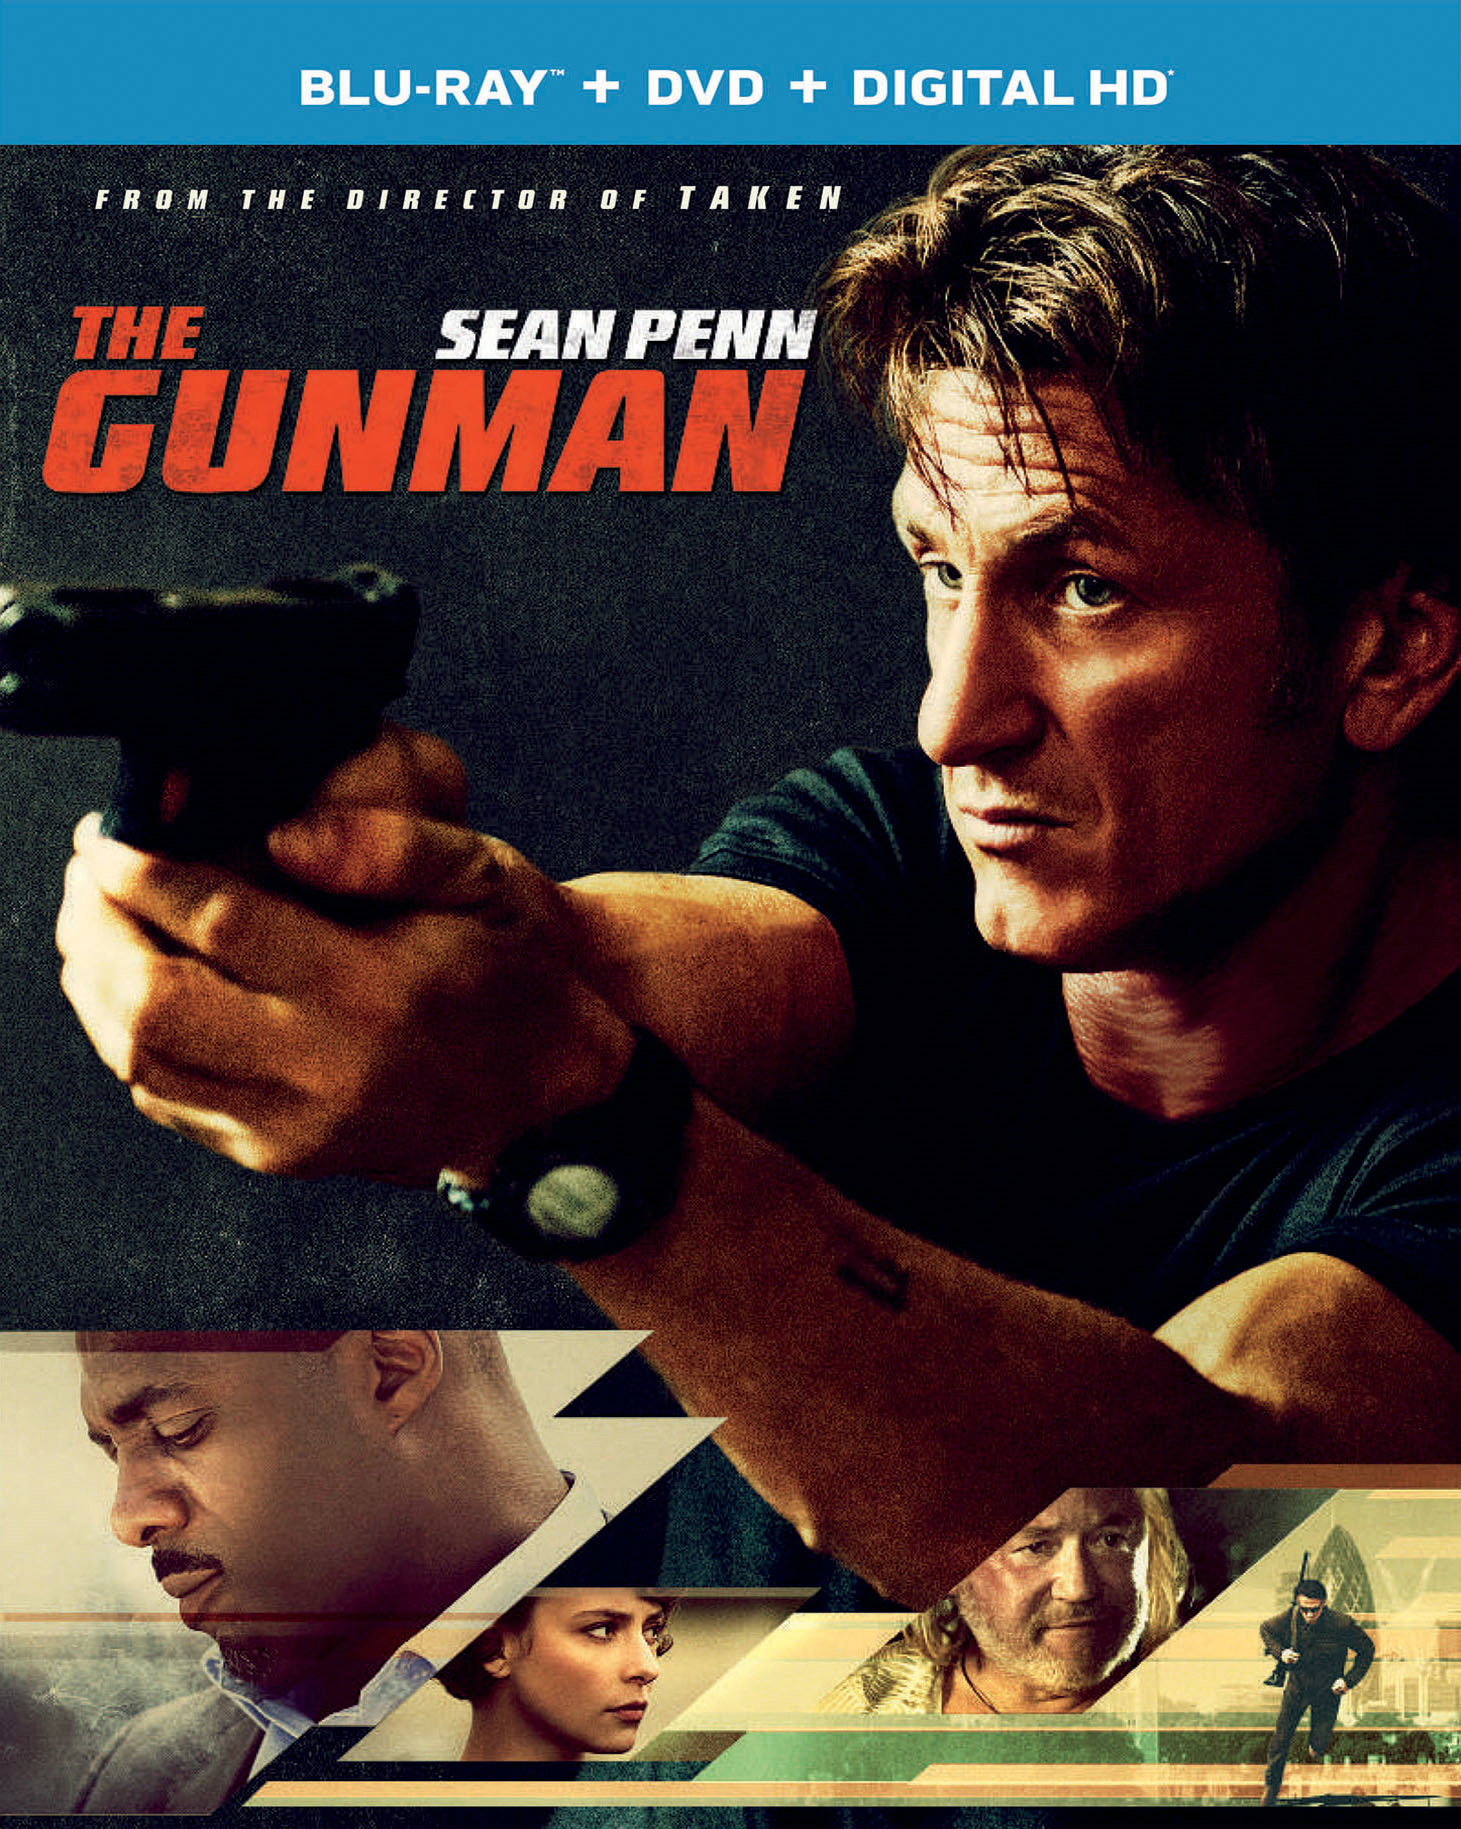 The Gunman (DVD + Digital) - Blu-ray [ 2015 ]  - Thriller Movies On Blu-ray - Movies On GRUV